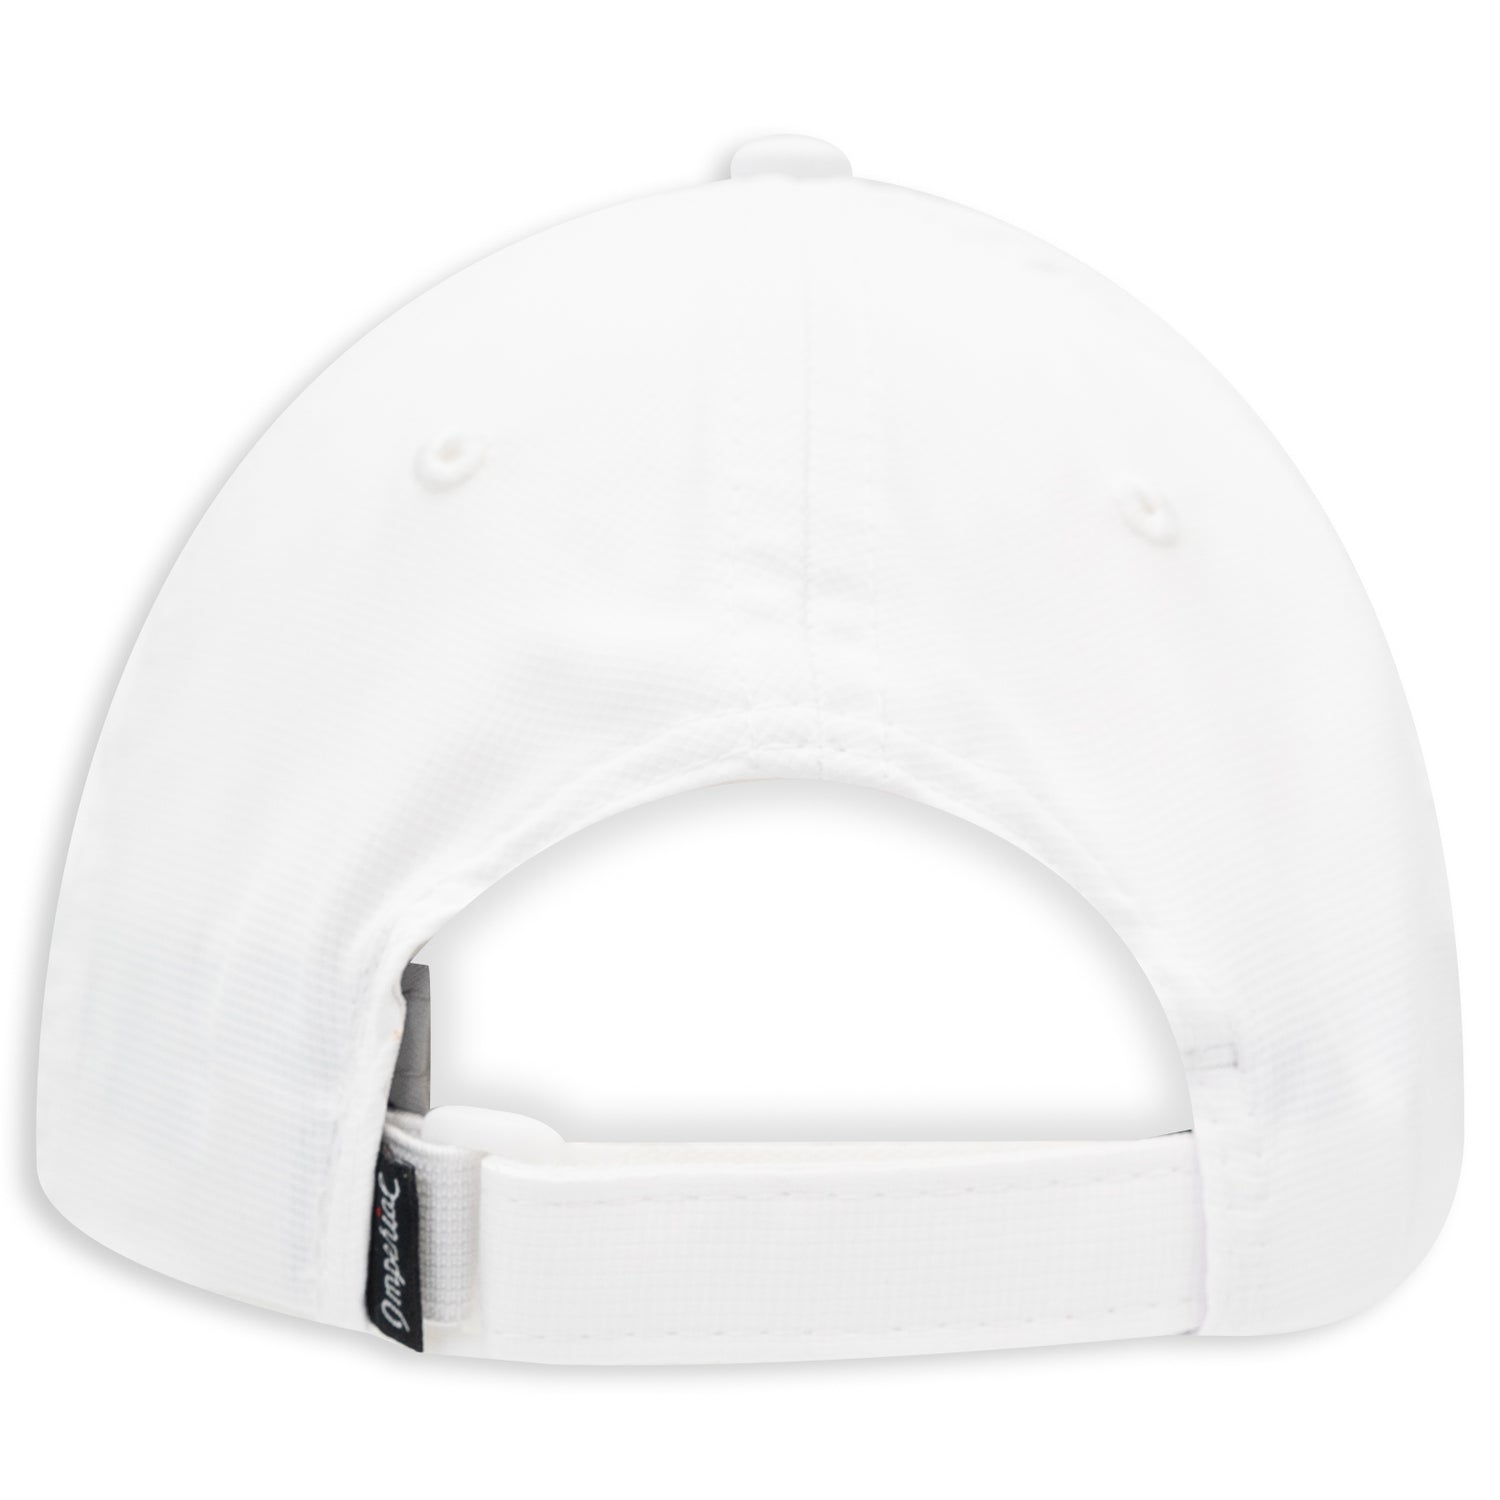 Texas A&M University Patch White Hat